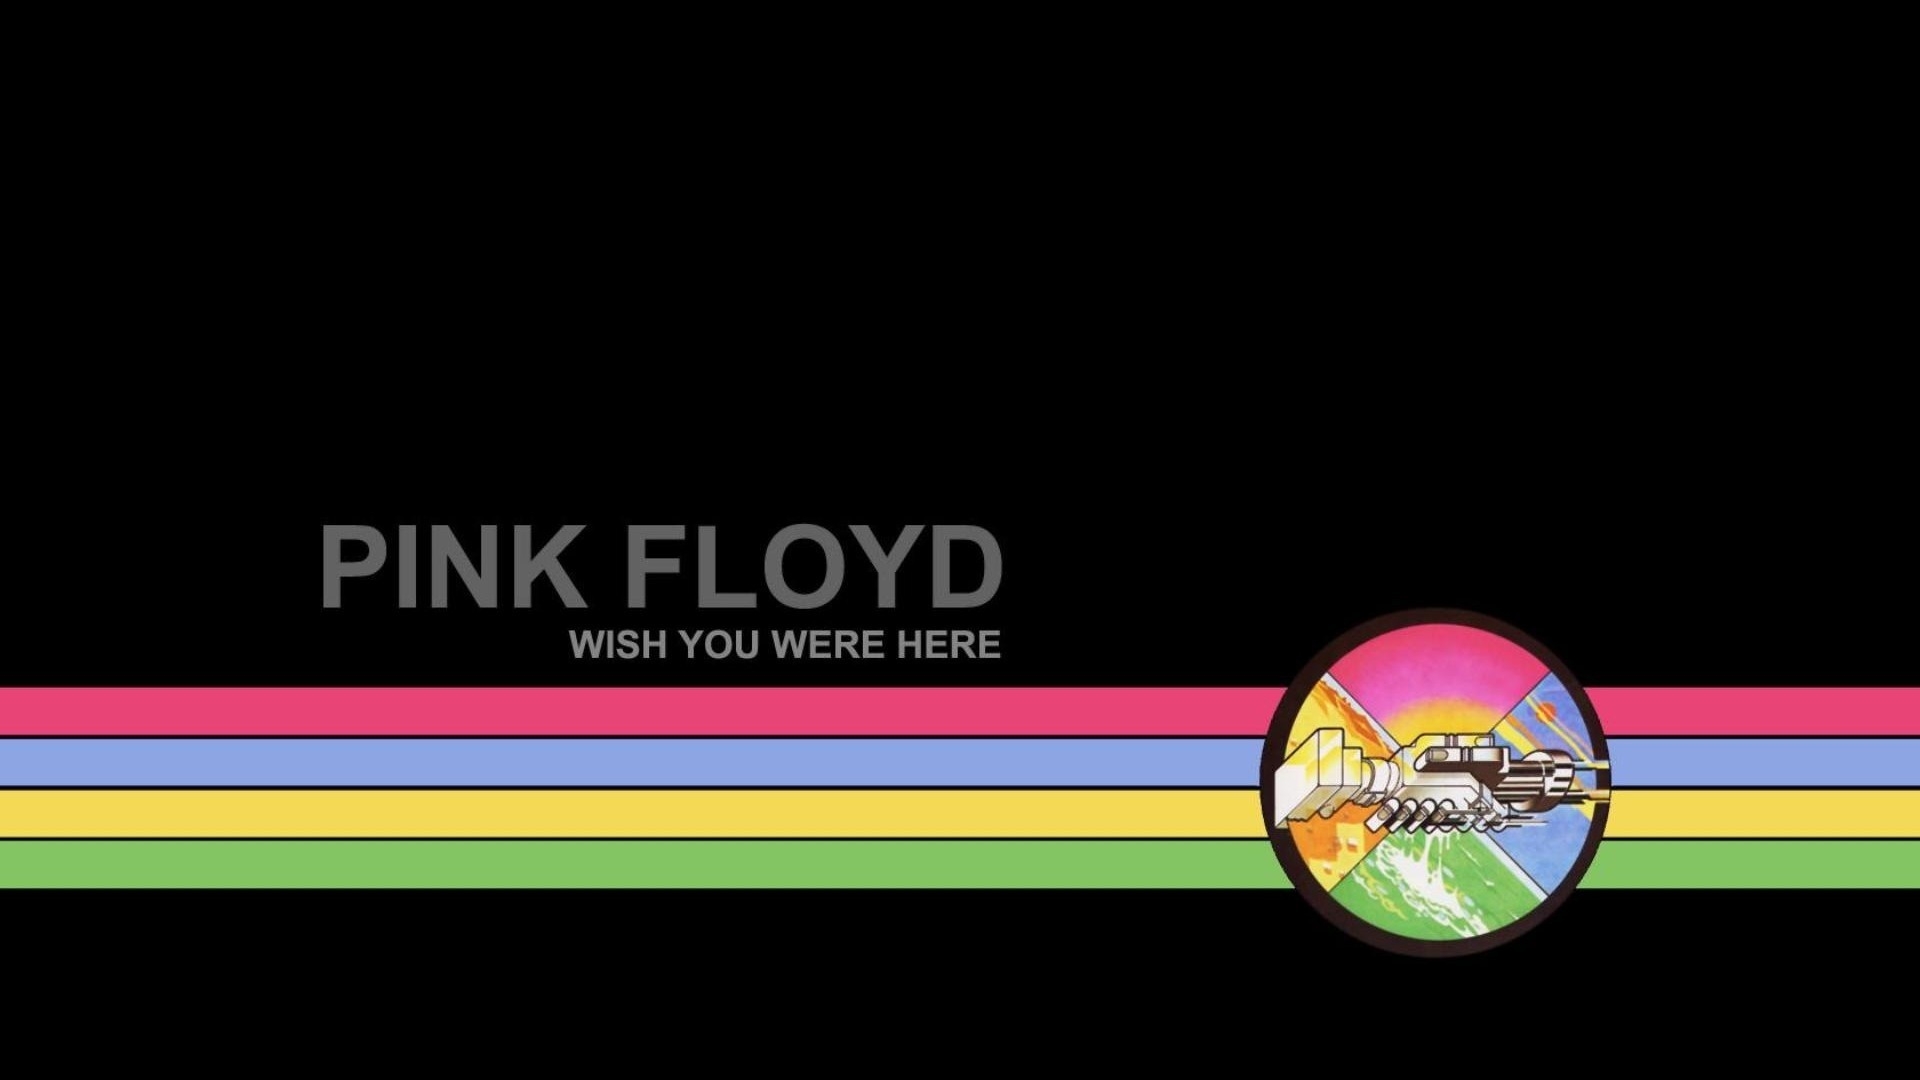 Pink Floyd Logo for 1920 x 1080 HDTV 1080p resolution